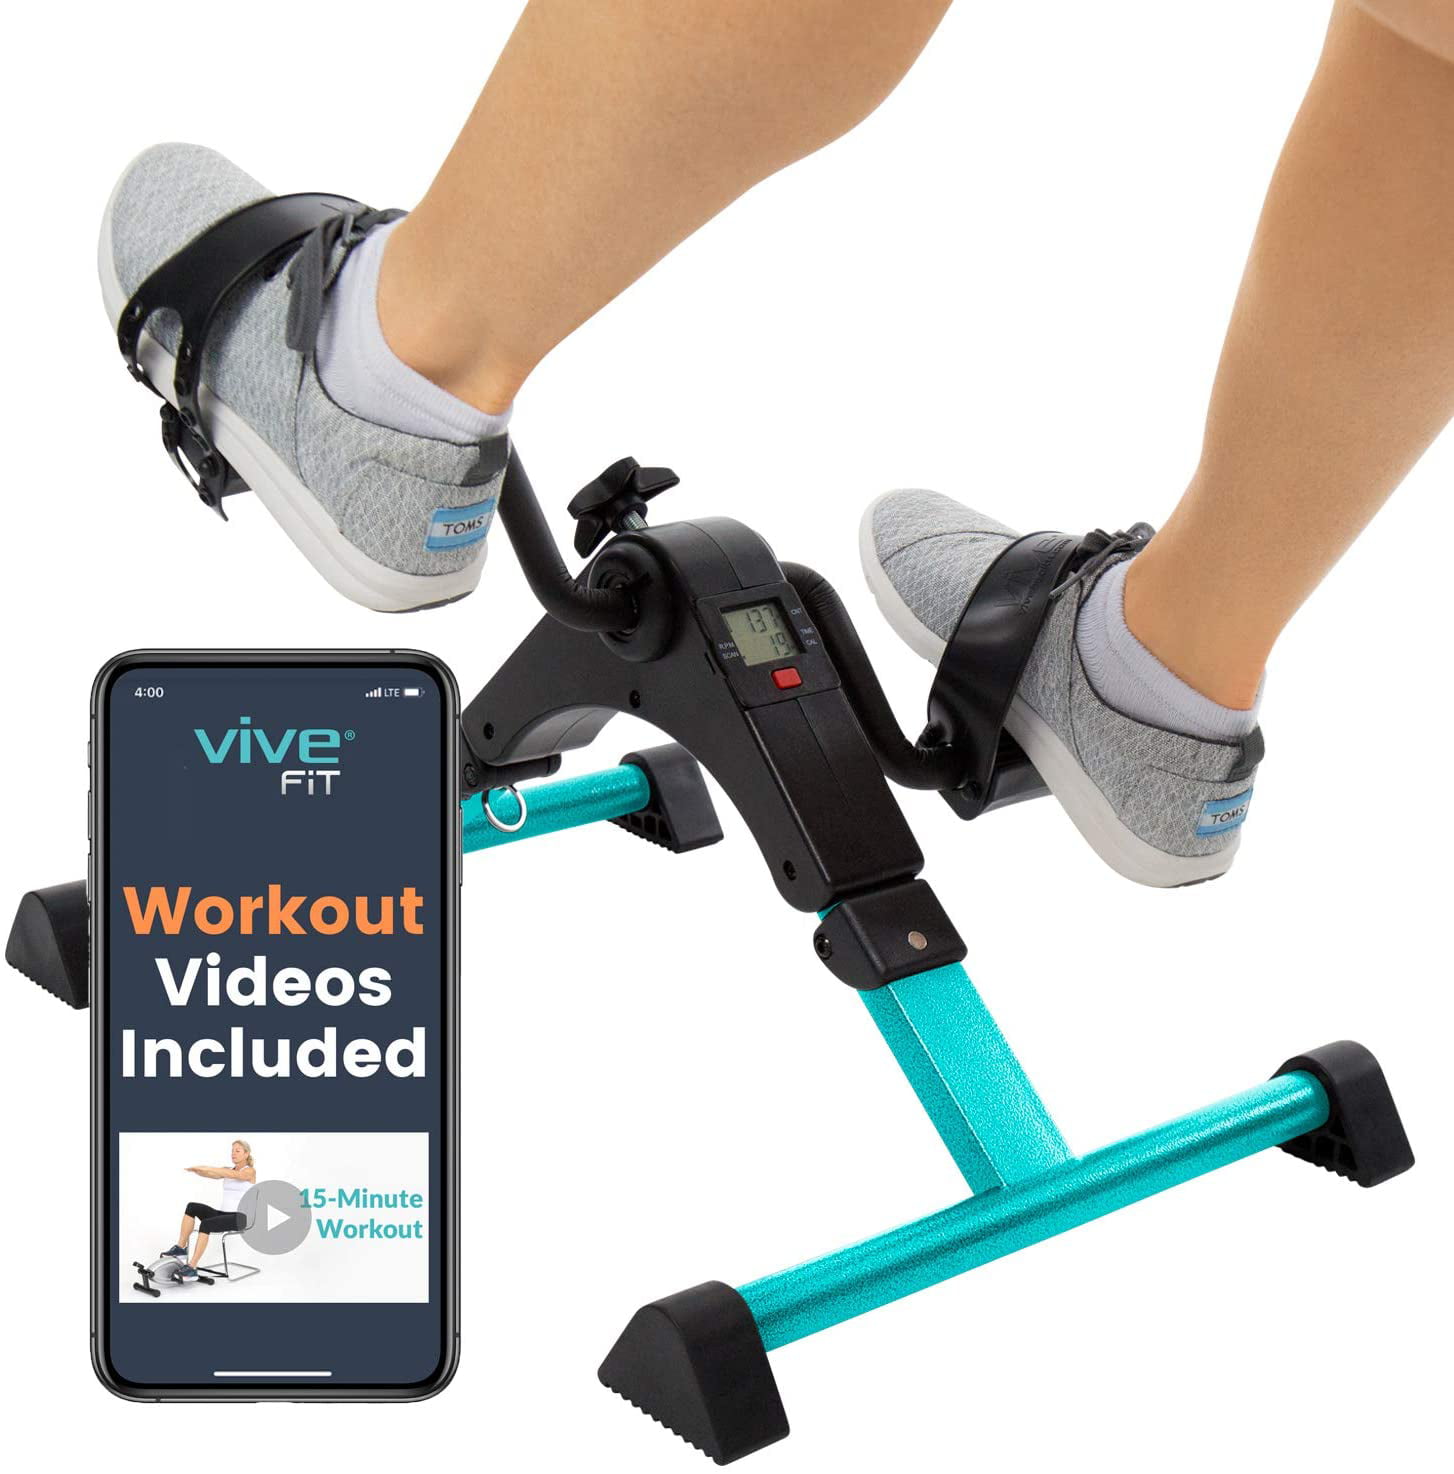 Digital Exercise Bike Workout Arm/Leg Muscles Pedal Mobility Mini Cardio Machine 